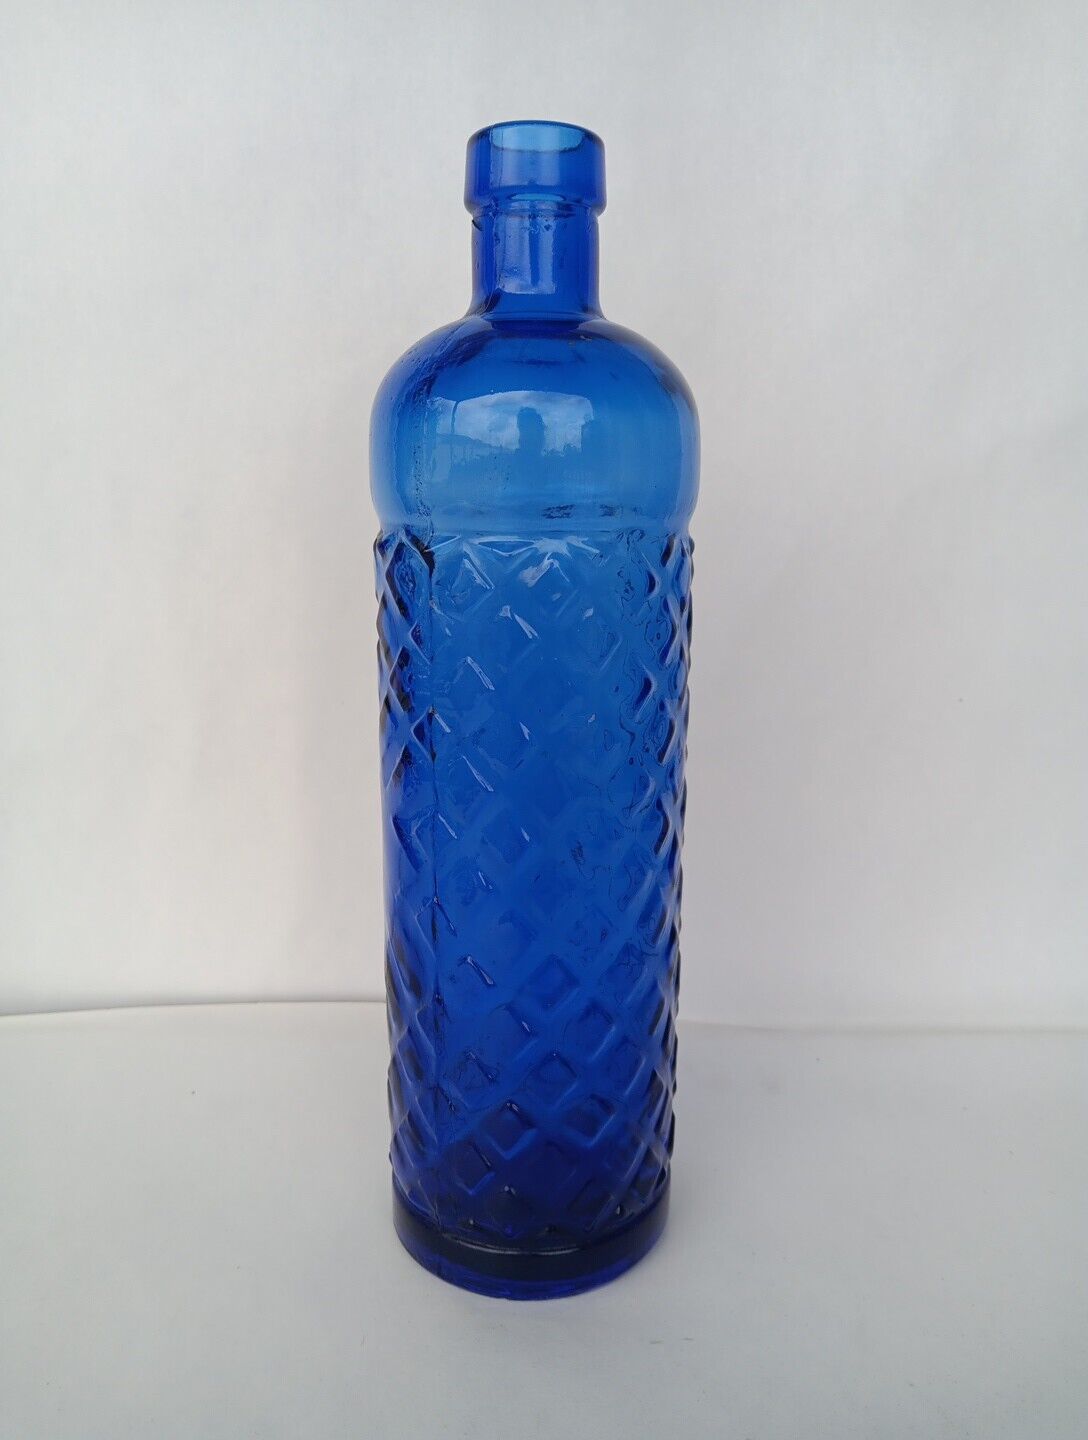 Vintage Cobalt Blue Glass Bottle Heavy Pressed Glass Décor Textured & Smooth...